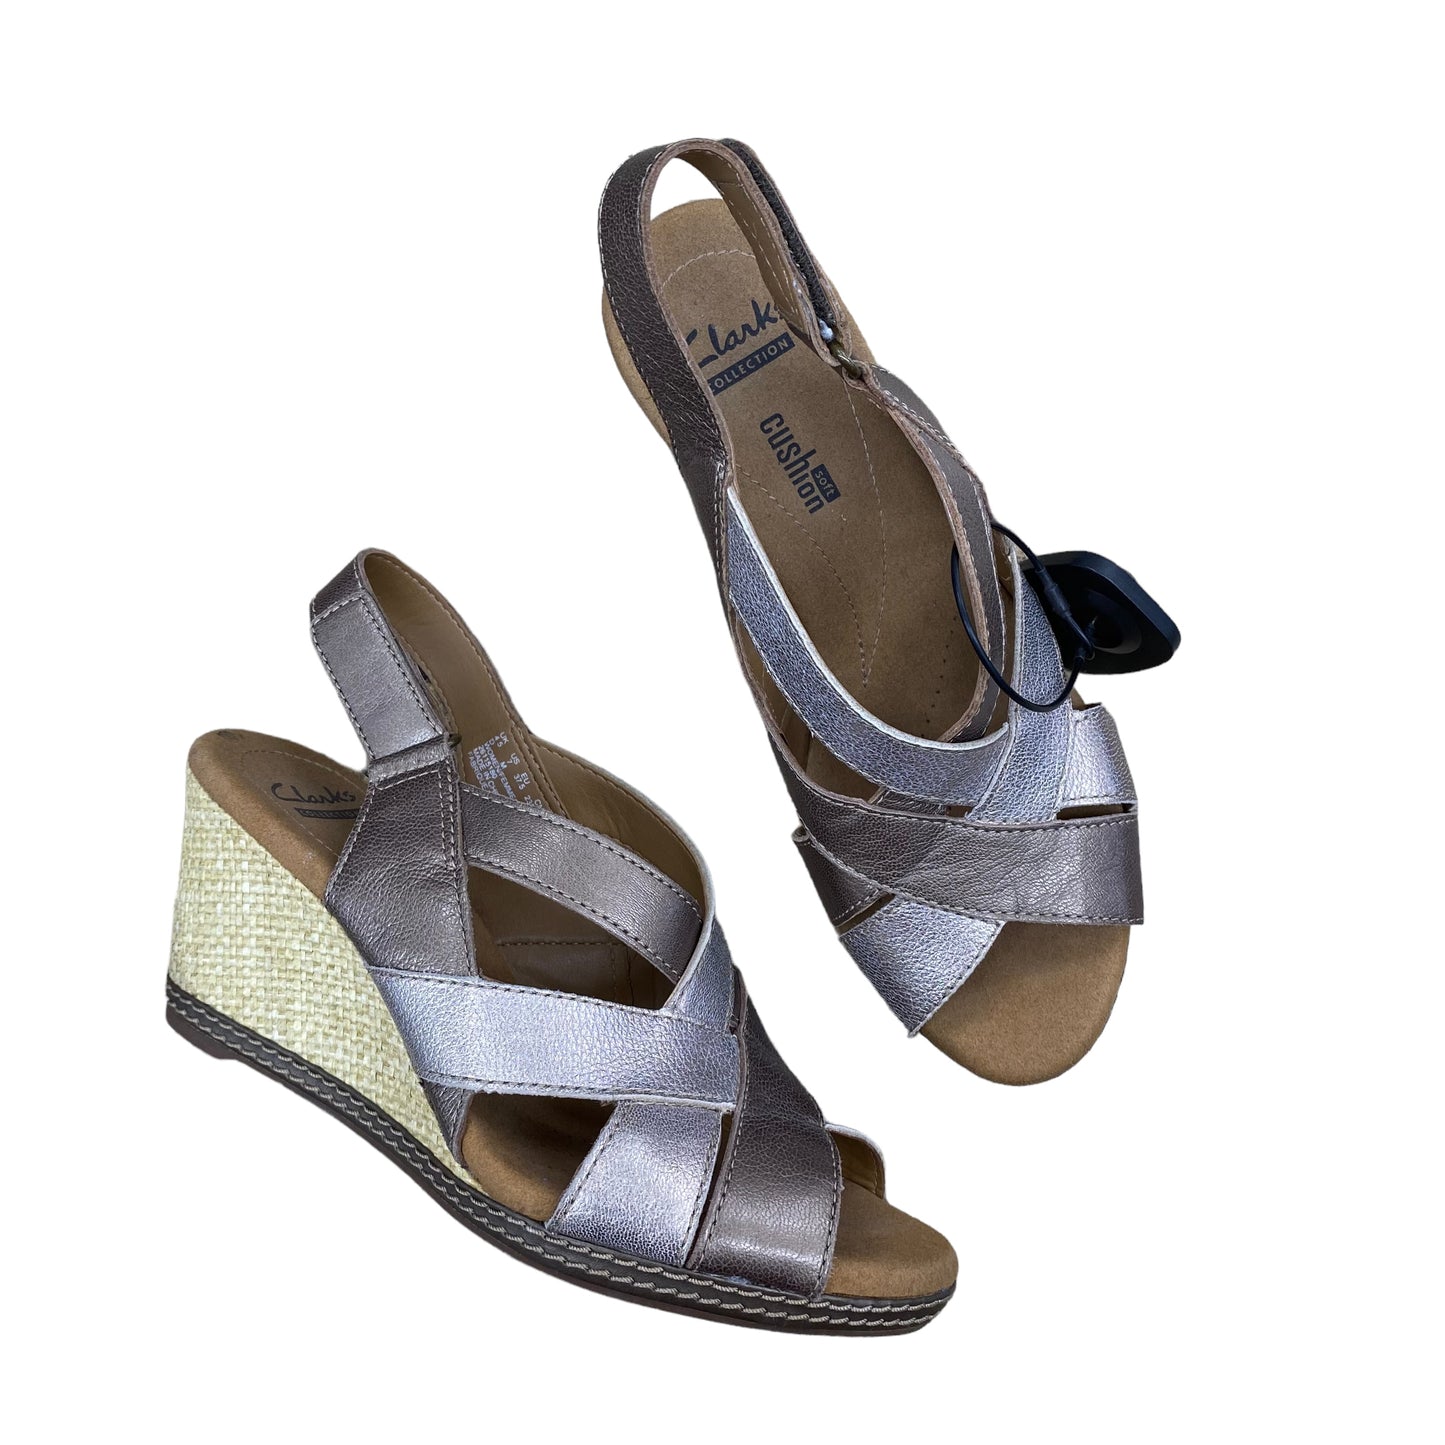 Sandals Heels Platform By Clarks  Size: 7